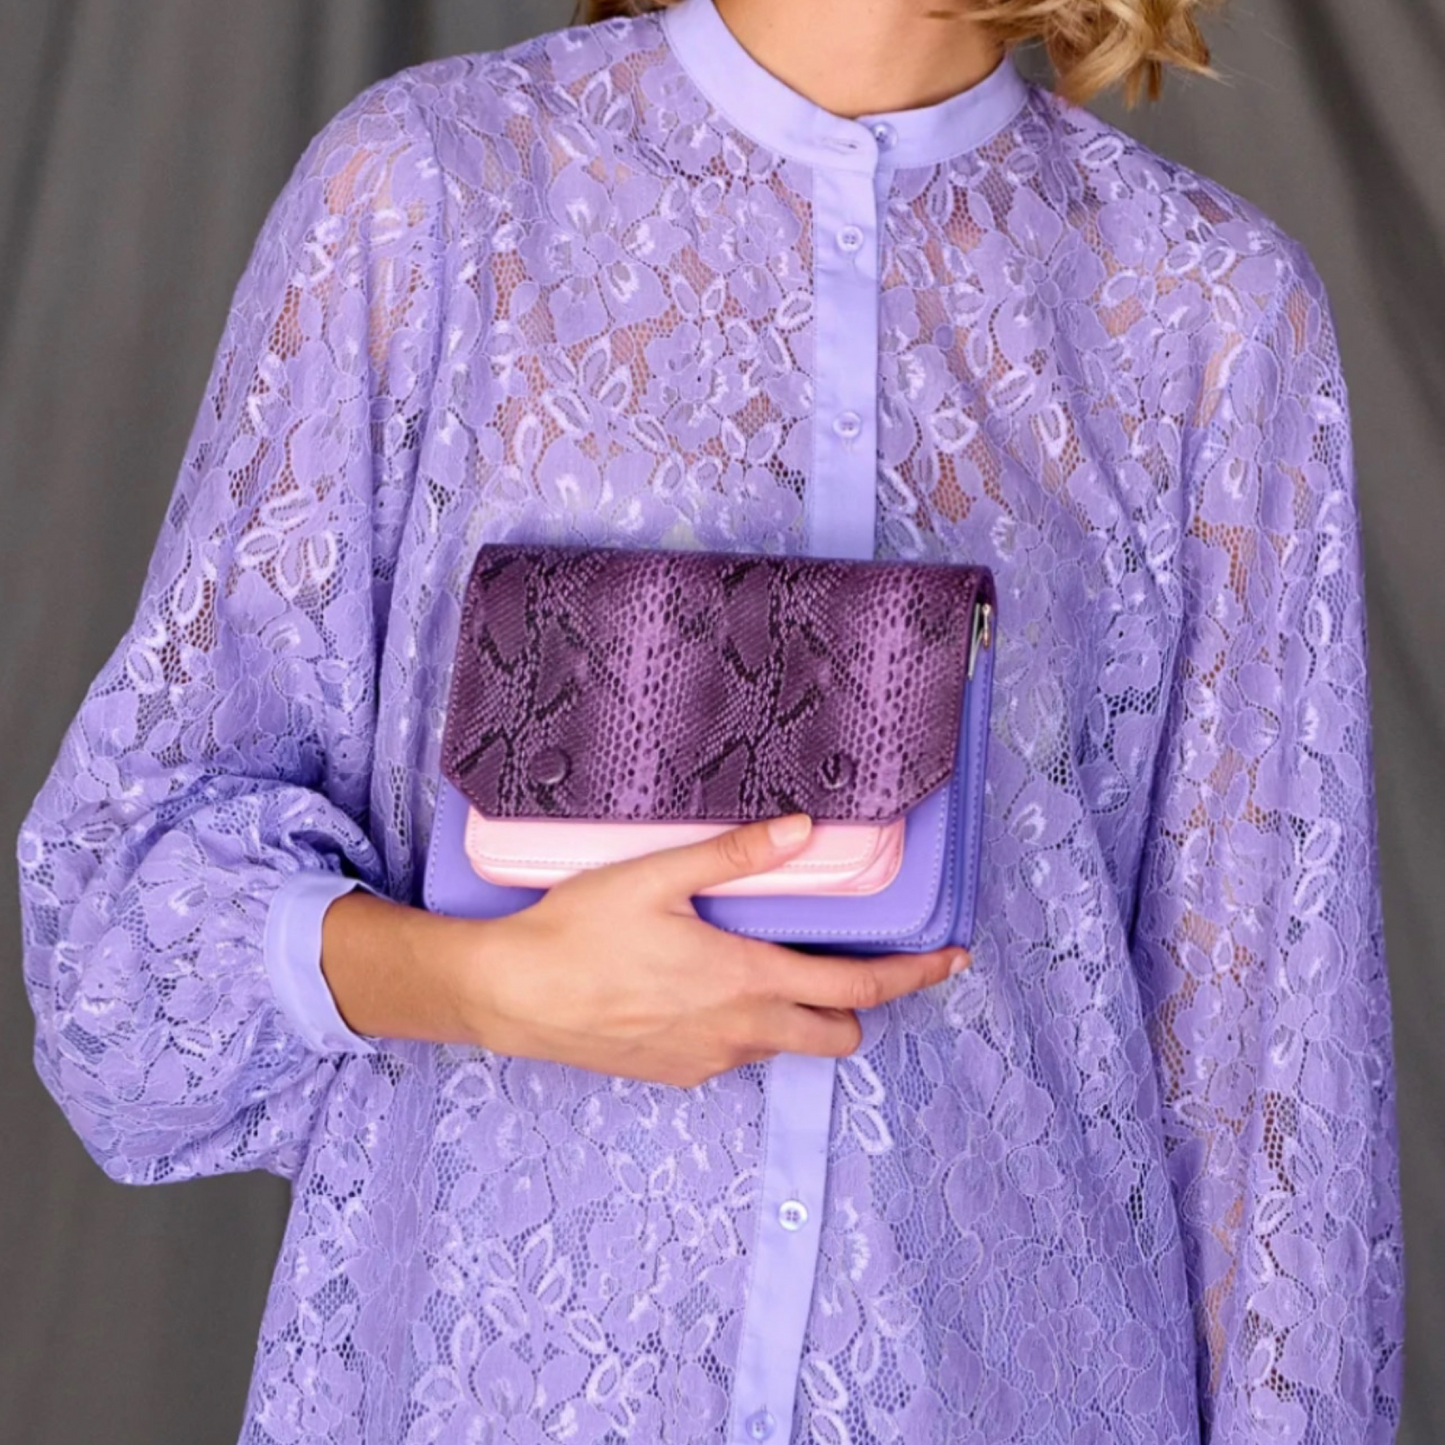 Noella - Bristol Lace Tshirt - Lilac